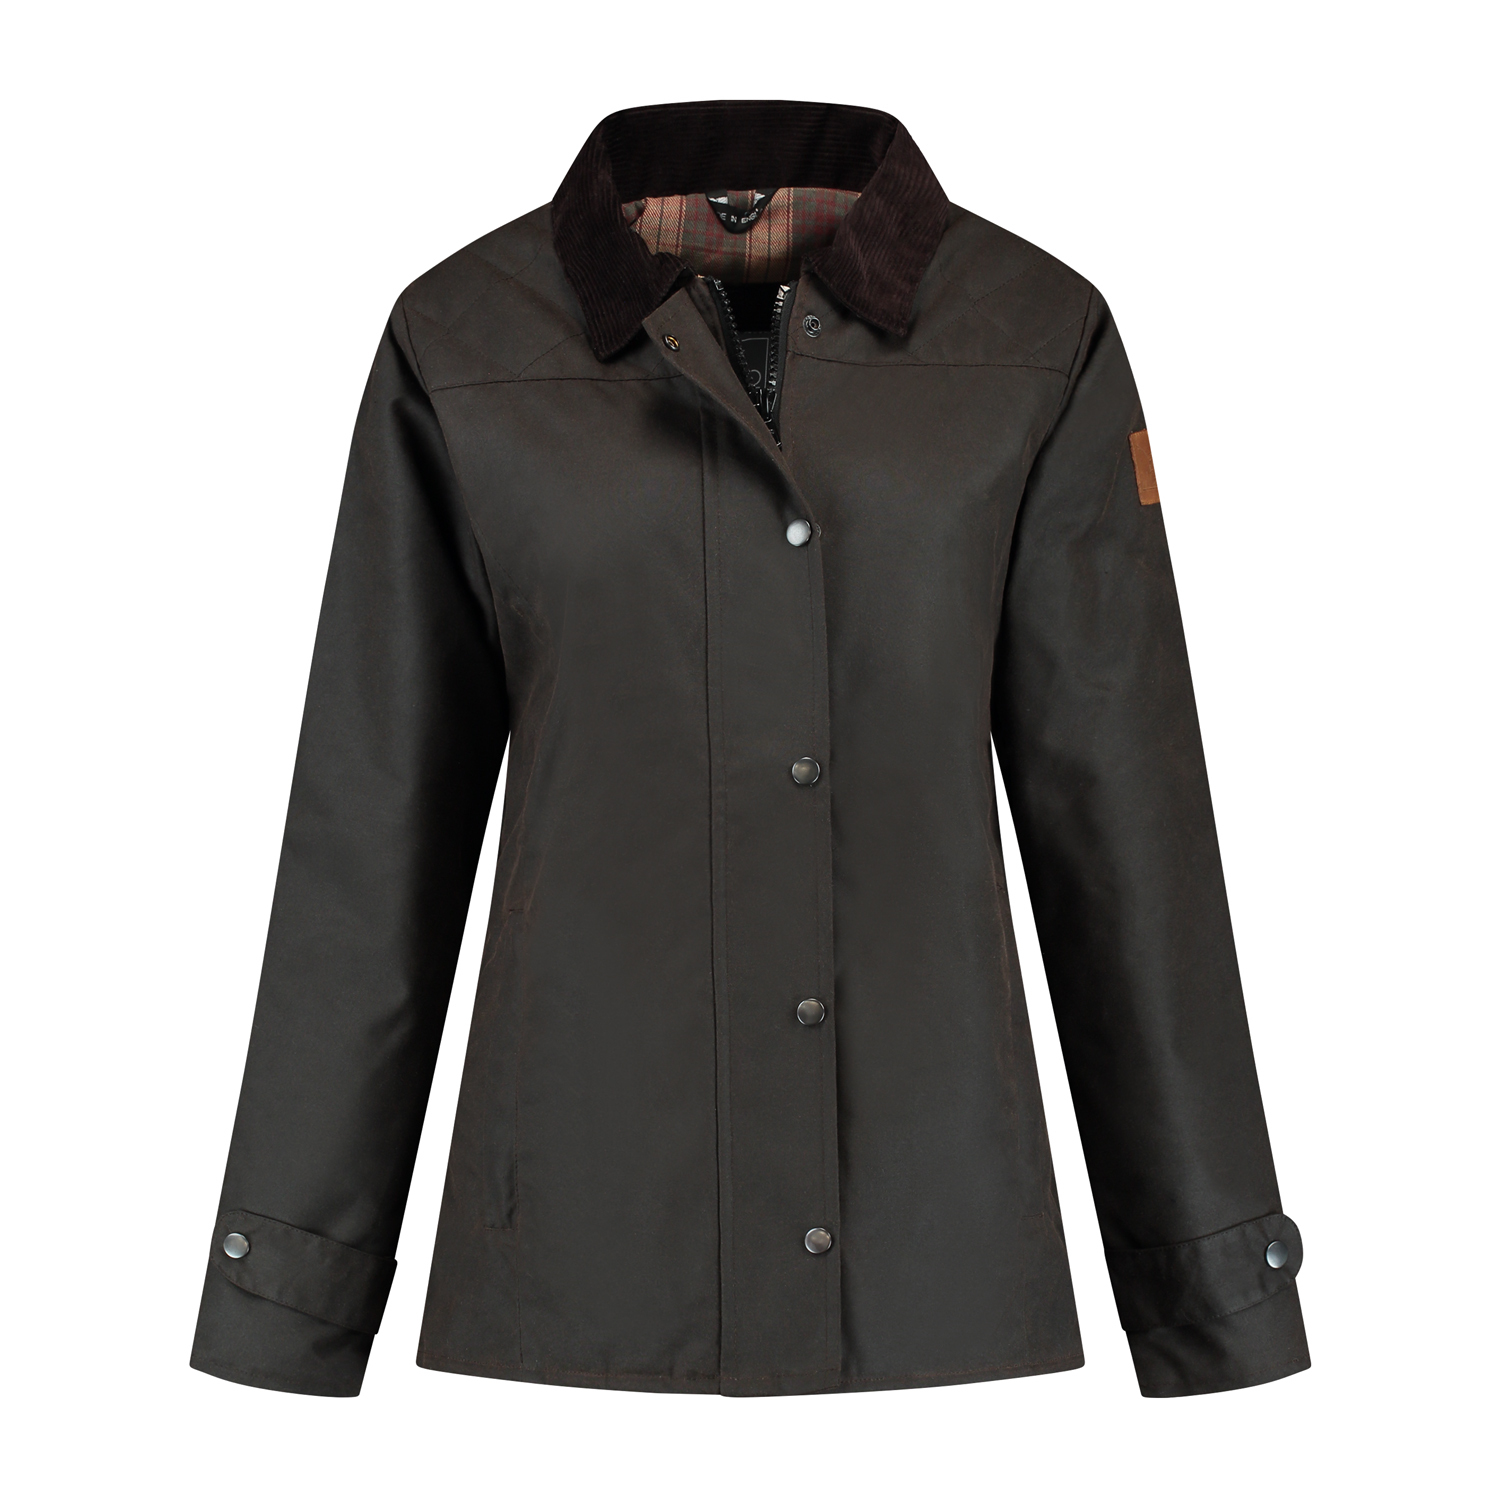 Куртка софтшелл MGO leisure wear Meghan Wax Jacket, коричневый